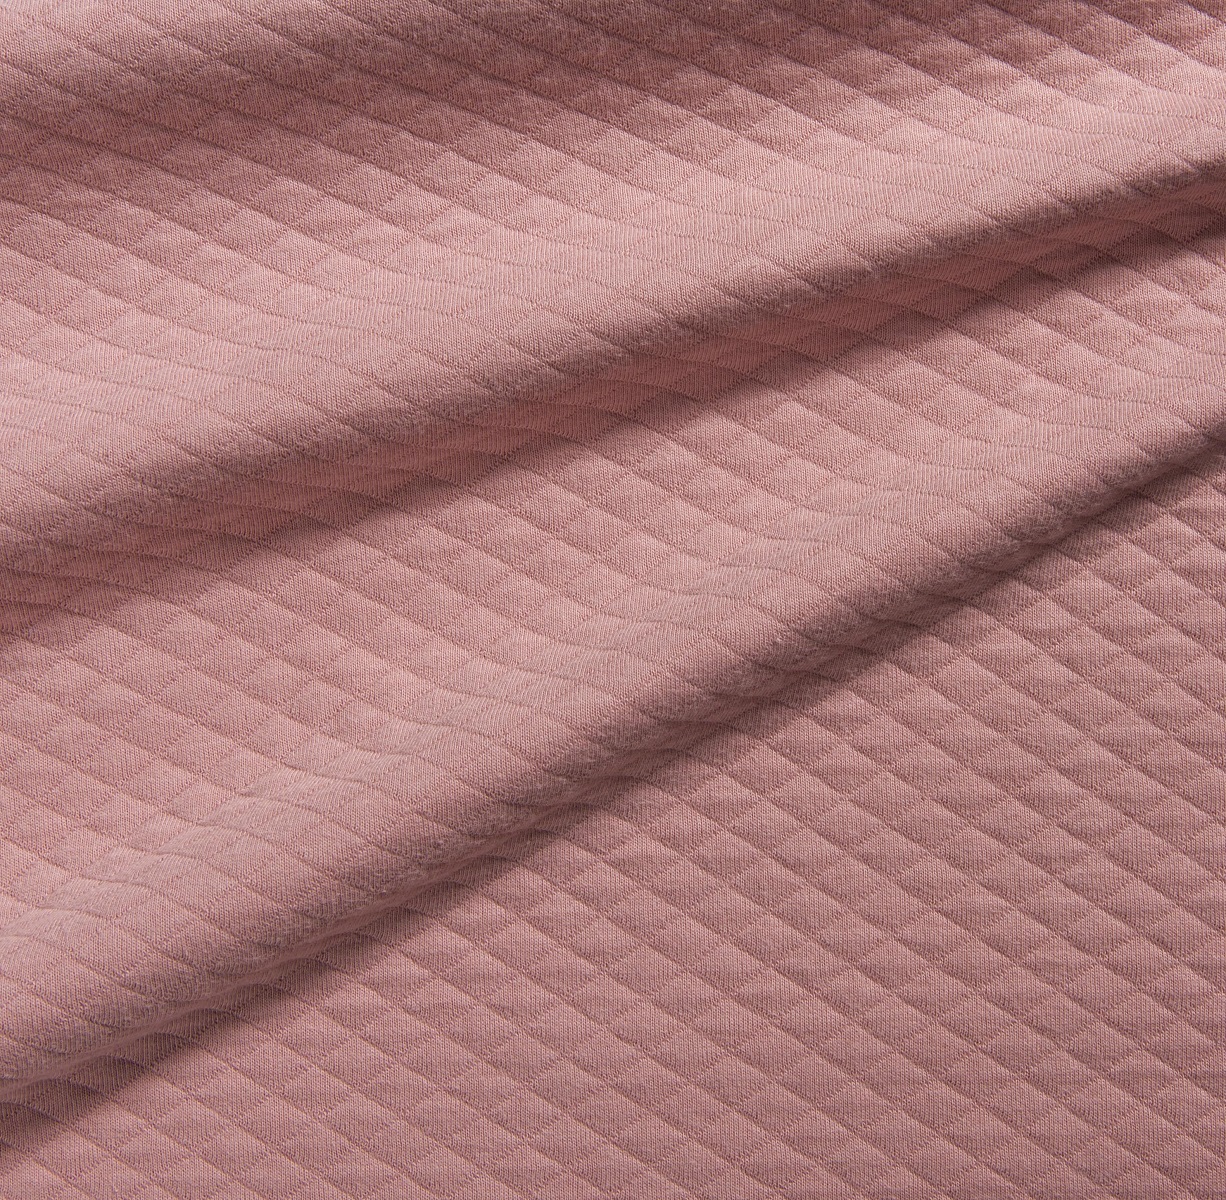 Dekostoff Barney rosa in 1,6m Breite (METERWARE) Baumwollstoff Stoff aus 85% Baumwolle